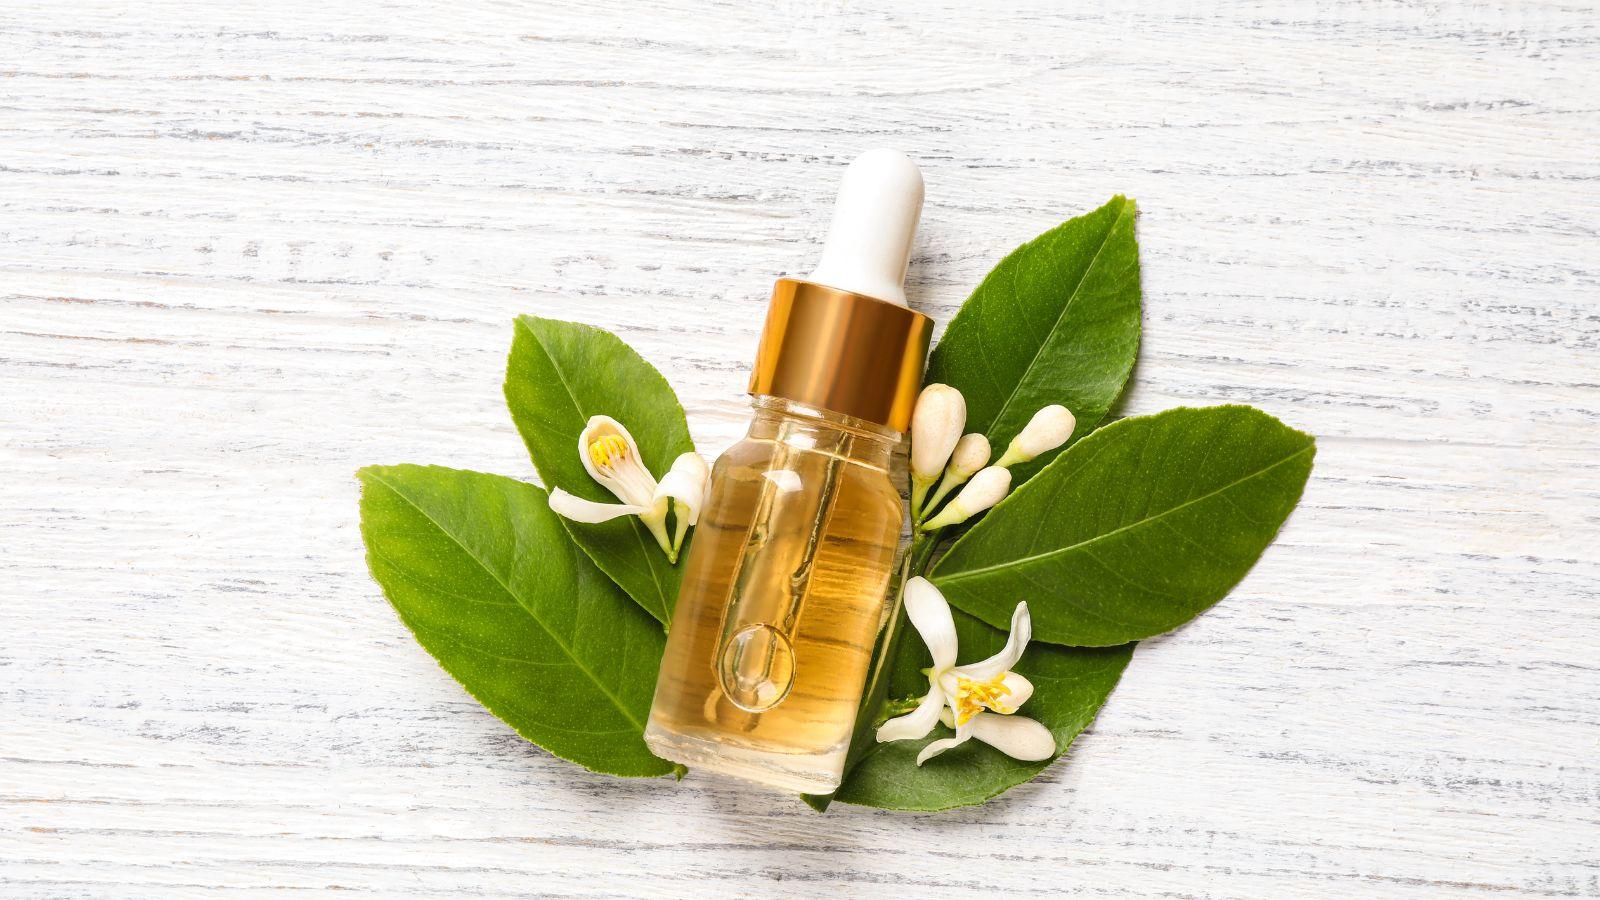 essential oils to aid sleep neroli. Image of a bottle of neroli essential oil on a neroli flower and leaf